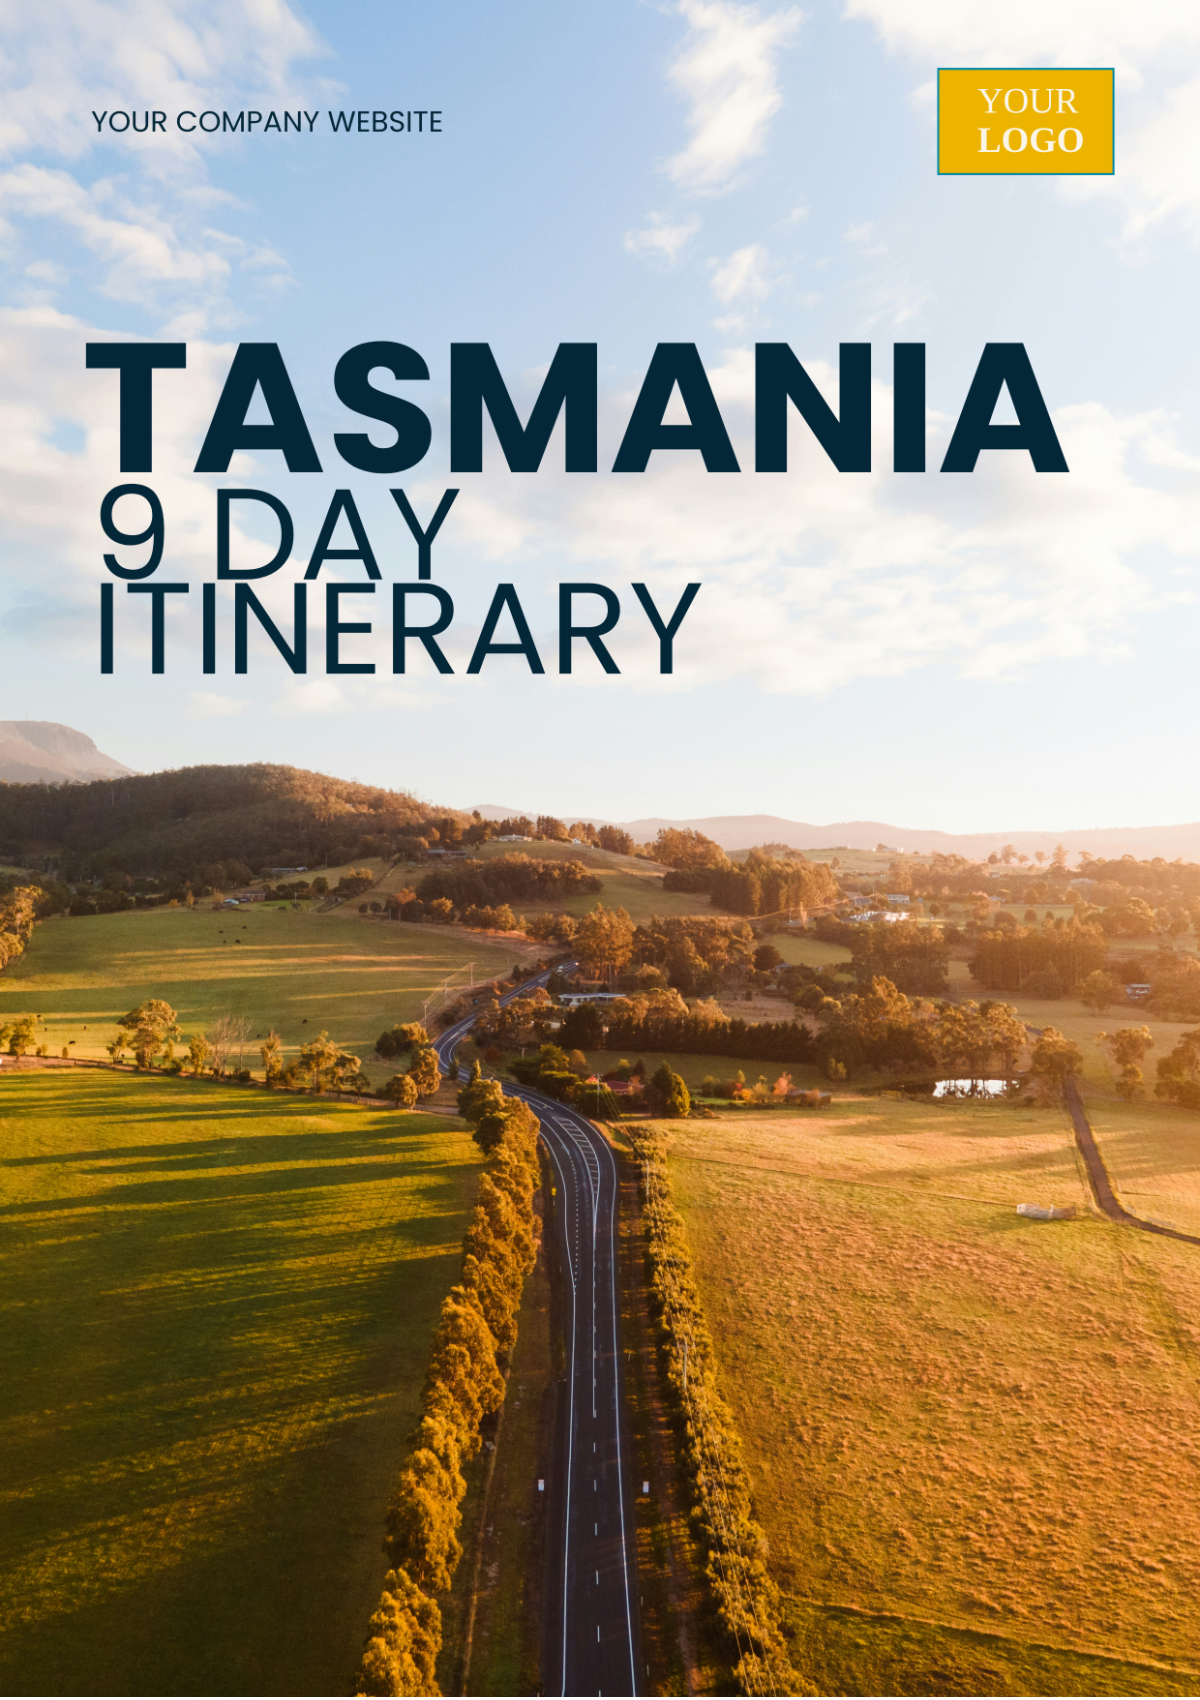 9 Day Tasmania Itinerary Template